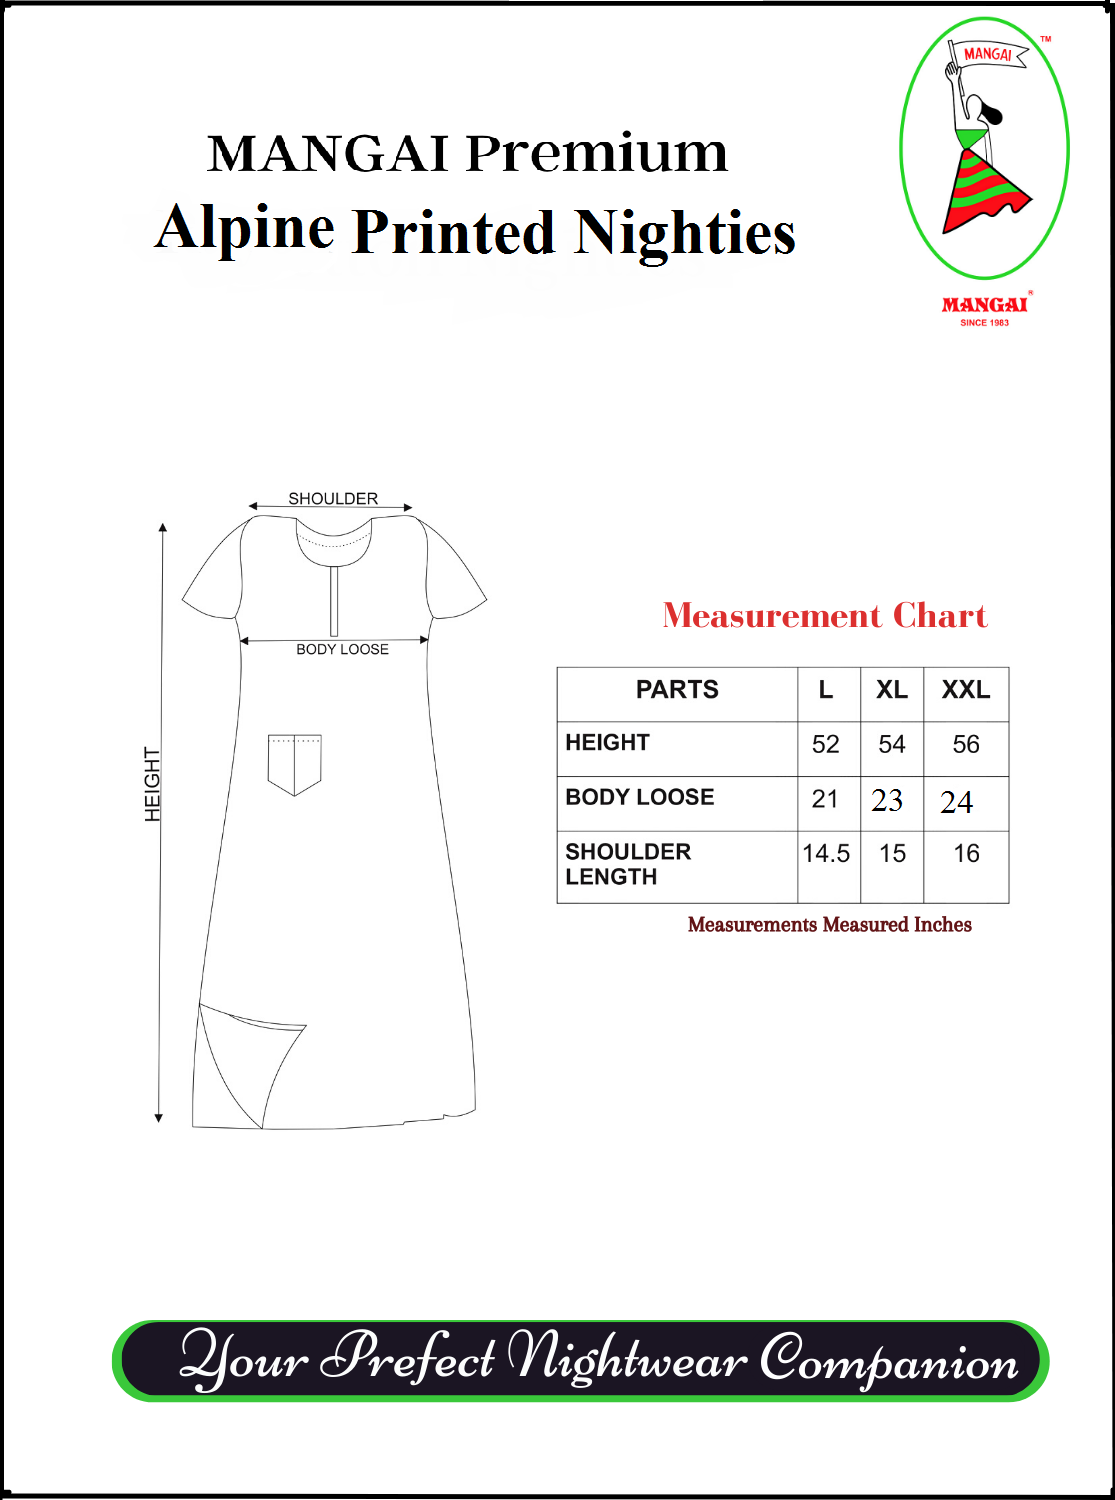 MANGAI Premium Alpine Embroidery Model Nighties | Full Length | Stylish Printed Model Nighties | Side Pocket | Half Sleeve | Perfect Nightwear Collection's for Trendy Women's